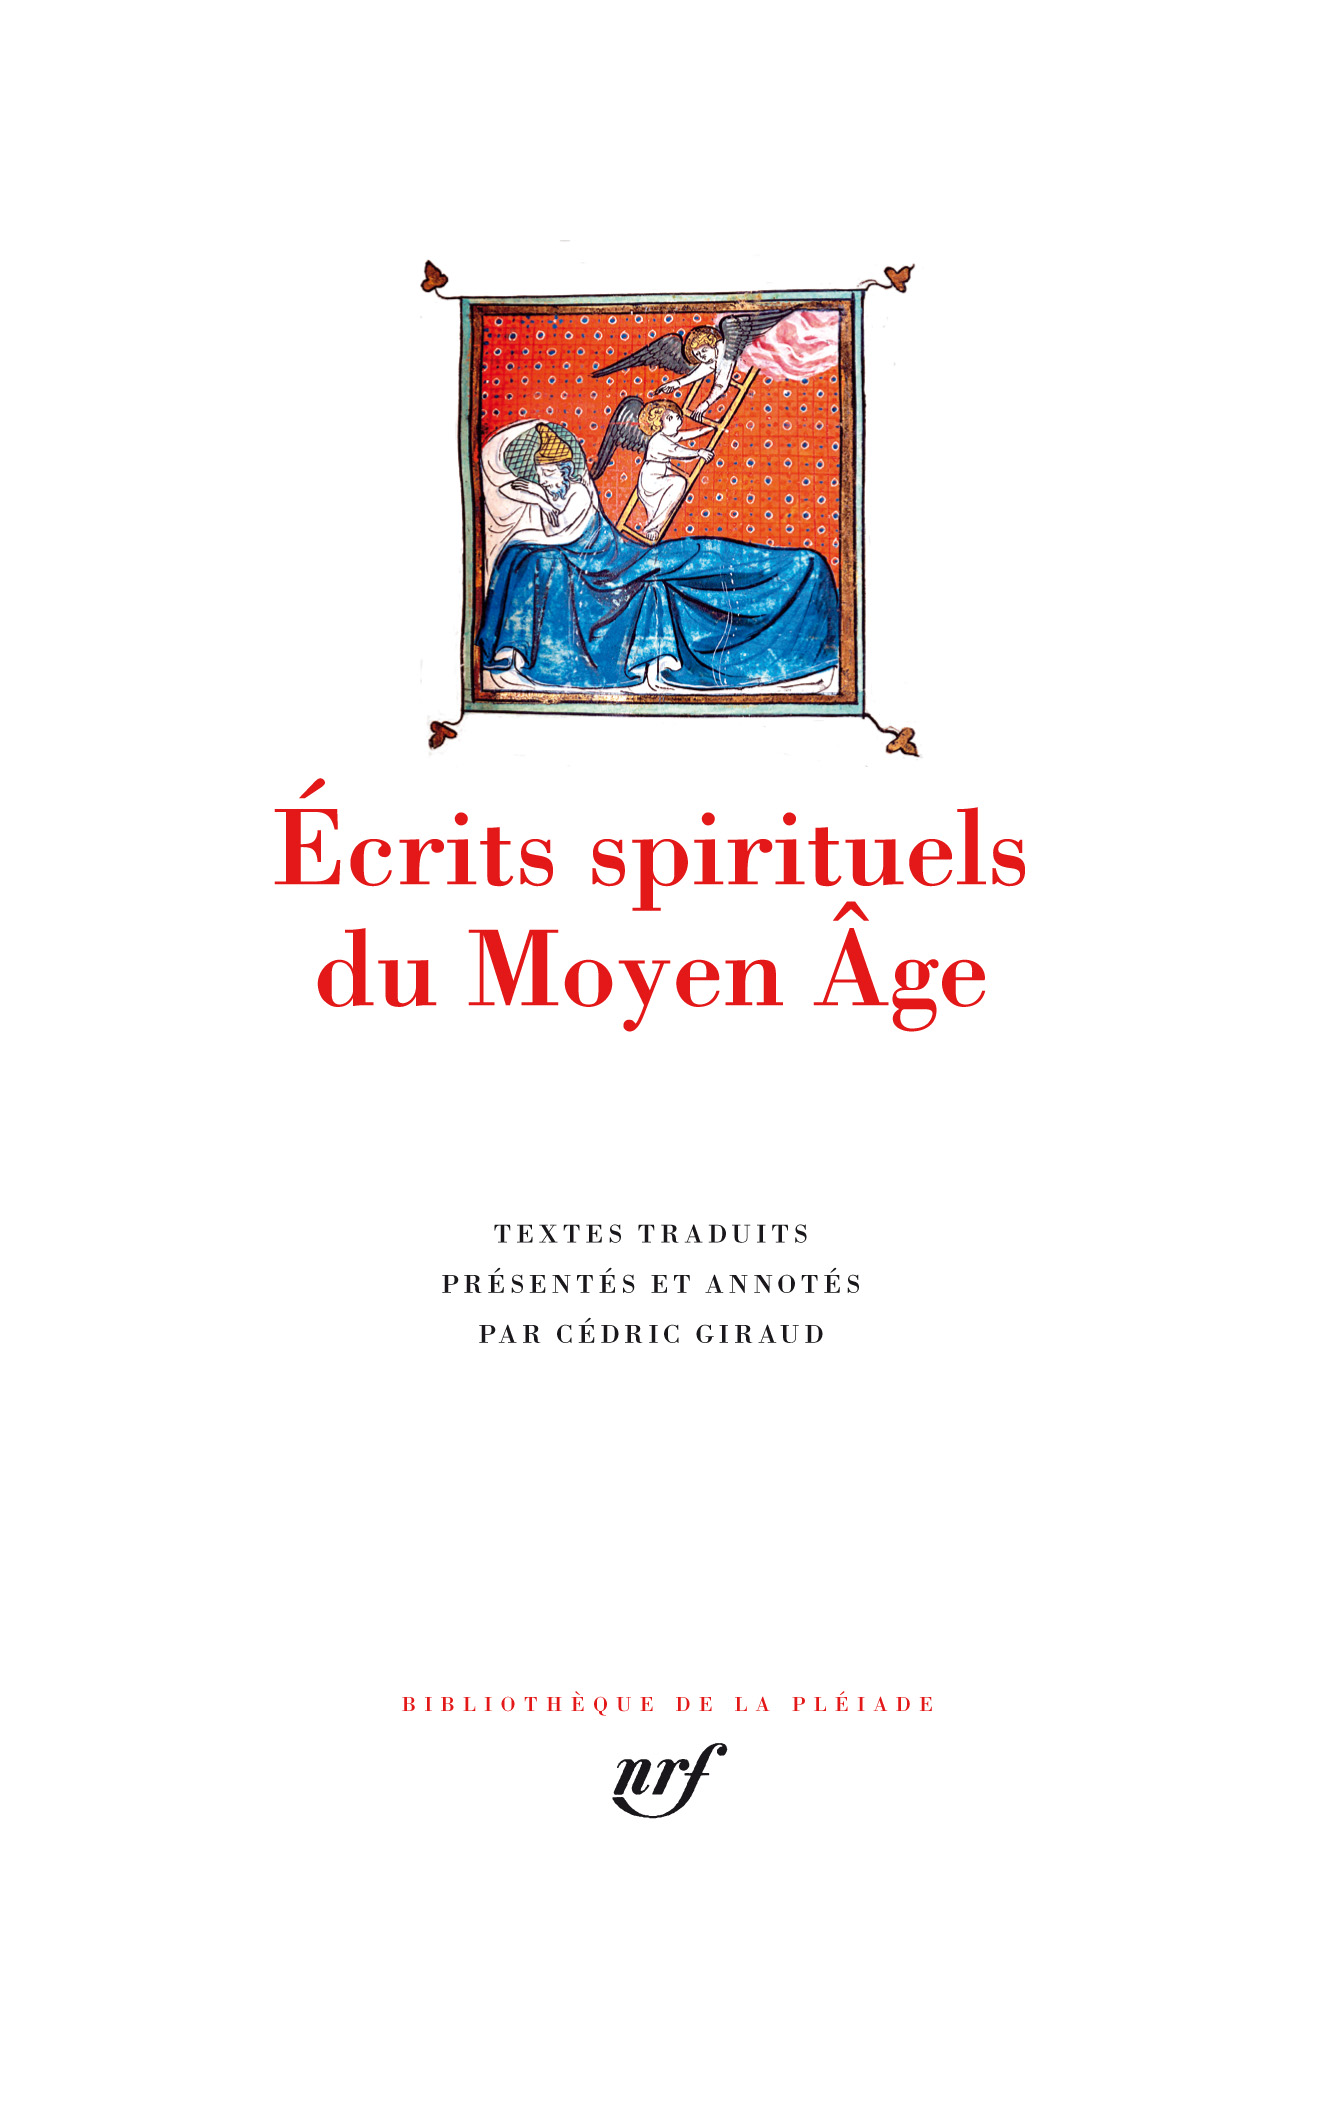 Écrits spirituels du Moyen Âge (éd. C. Giraud, Biblioth. de la Pléiade)